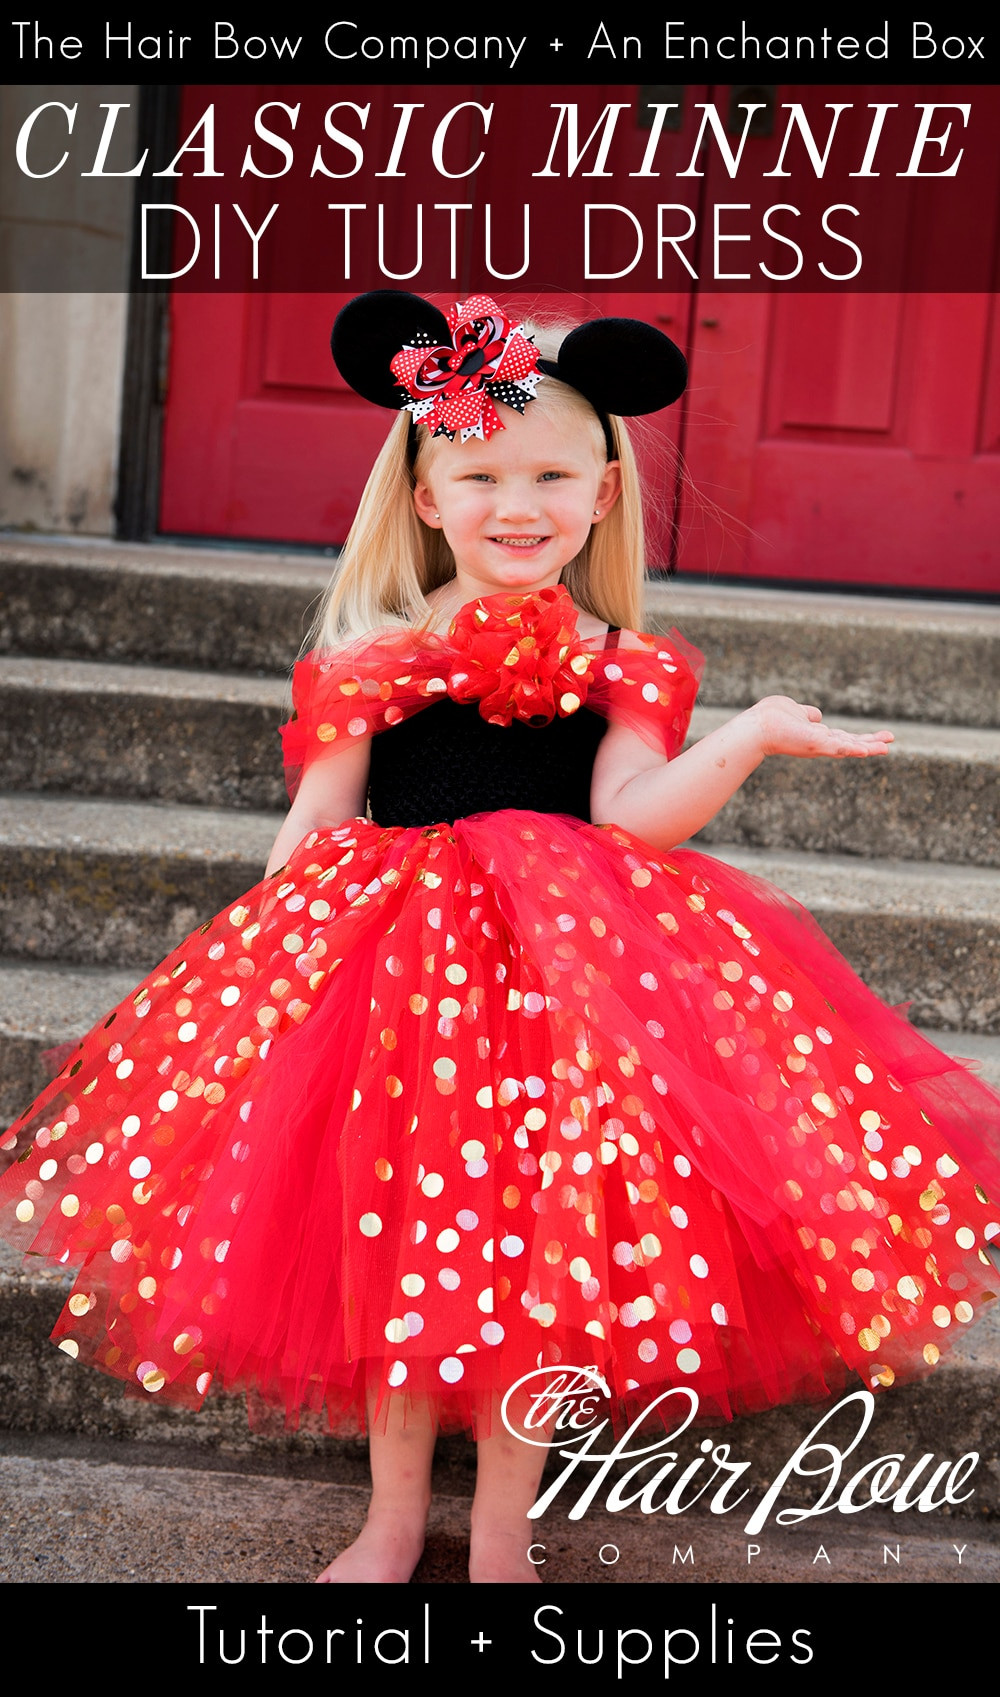 DIY Tutu Dress For Toddler
 Classic Minnie Mouse Tutu Dress DIY Tutorial The Hair